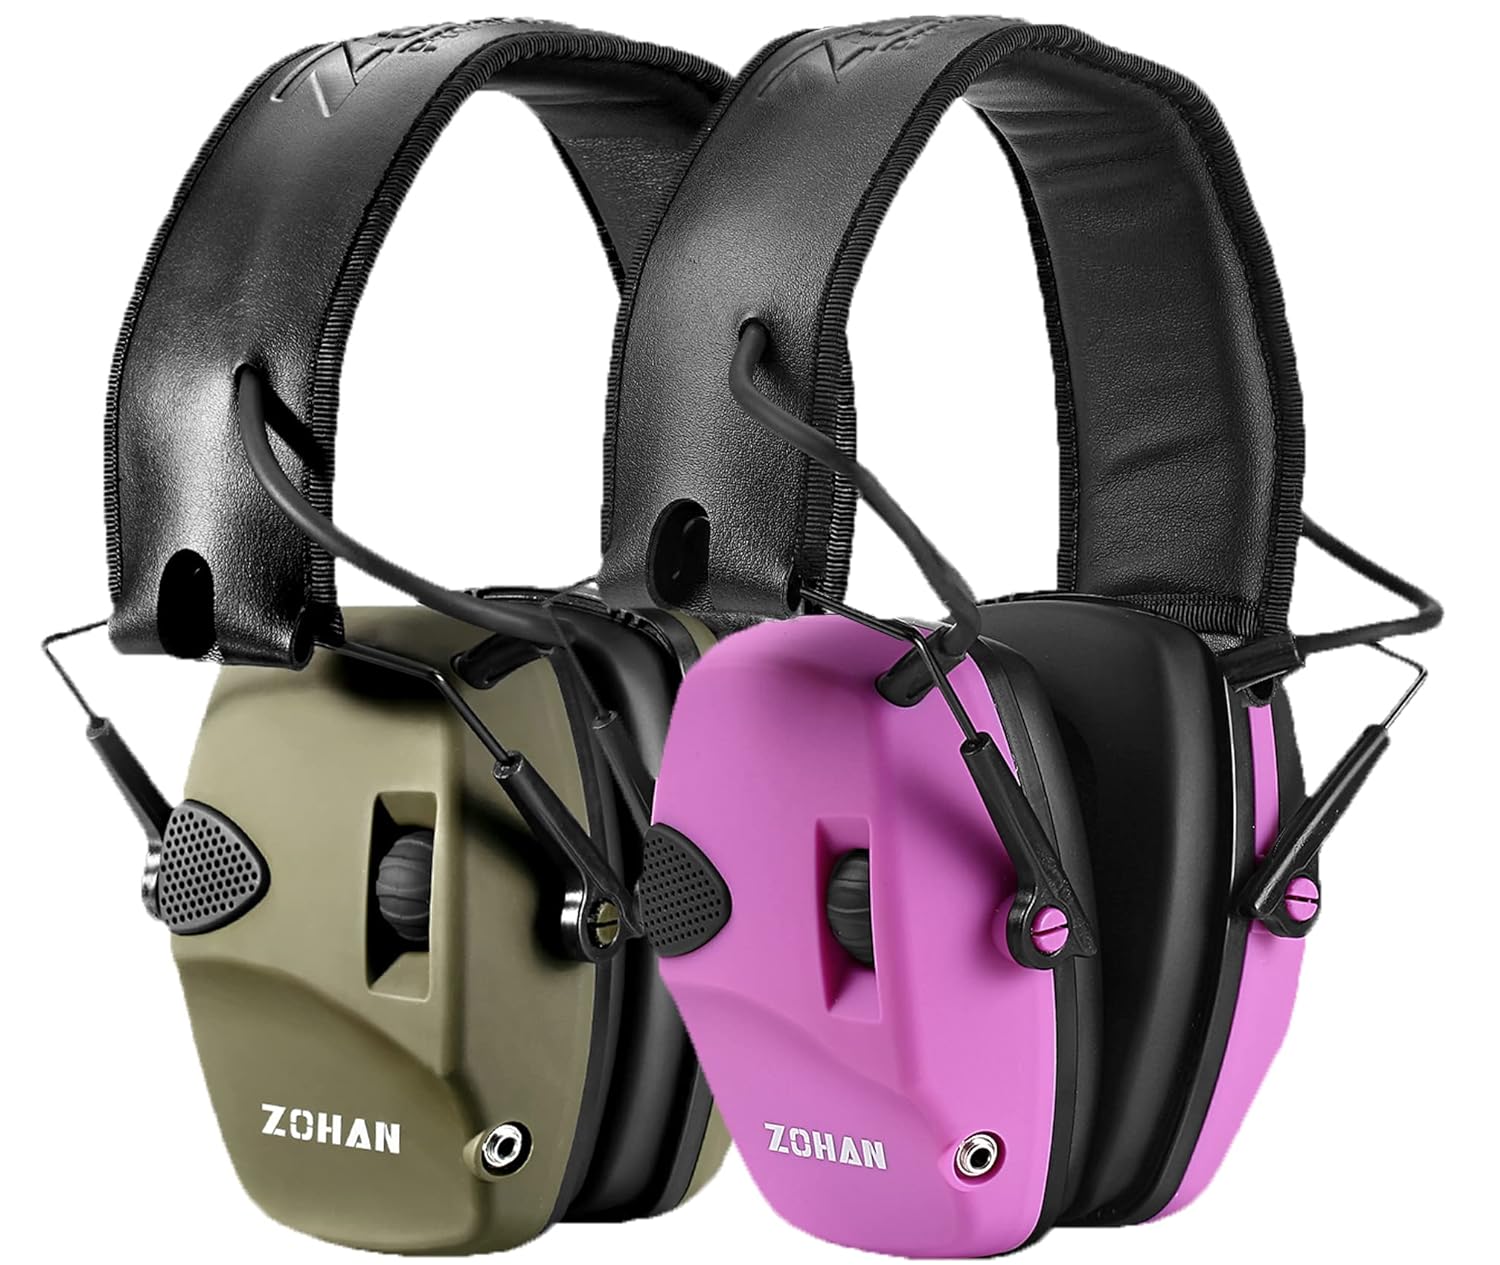 ZOHAN EM054 Electronic Shooting Ear Protection 2 Packs, Slim Hearing Protection Noise Reduction Earmuffs for Gun Range